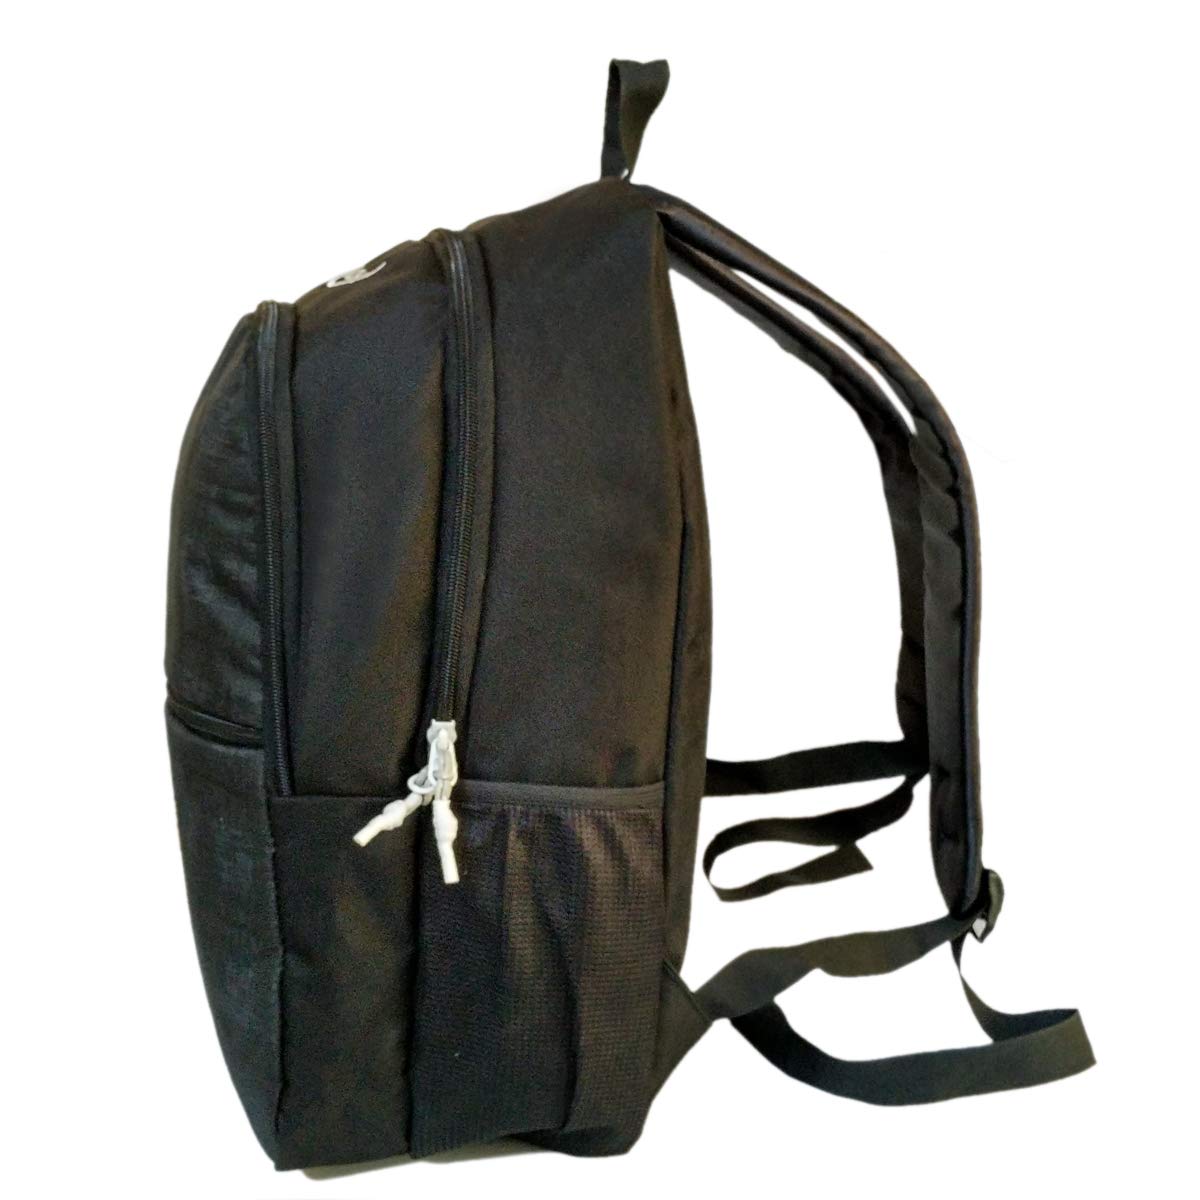 Prokick 30L Waterproof Casual Backpack | School Bag - Black Grains - Best Price online Prokicksports.com